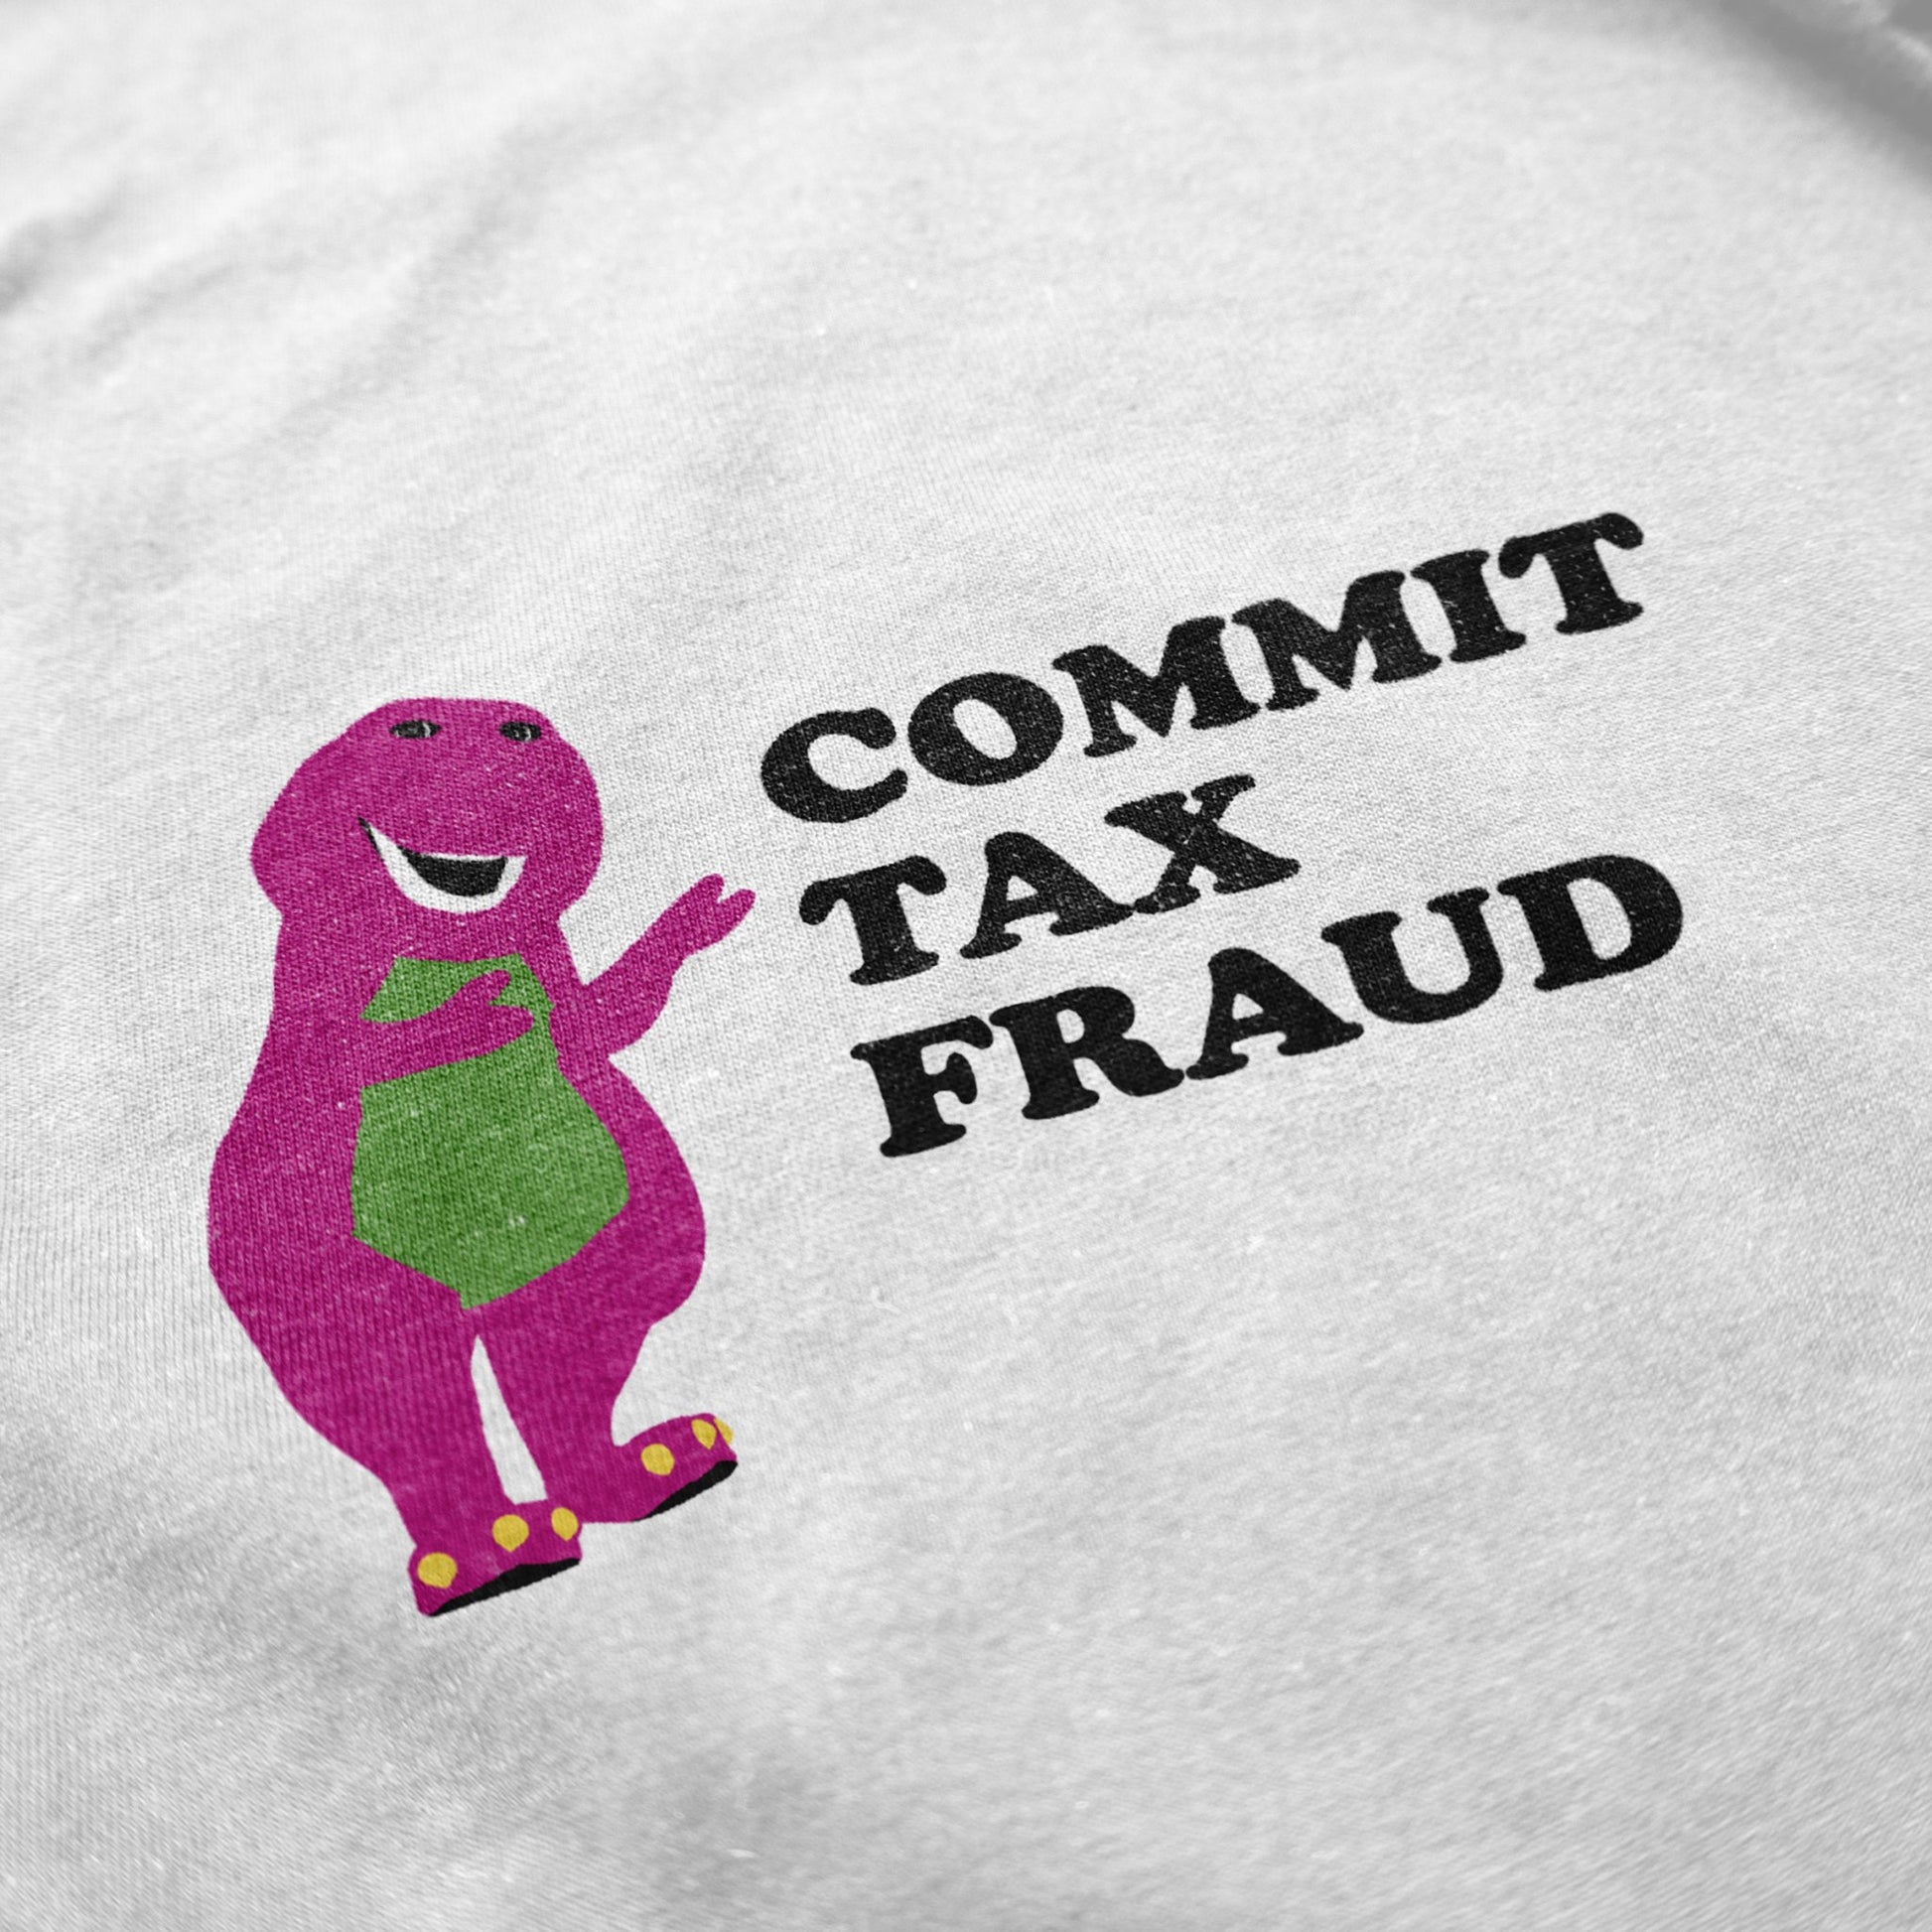 Commit Tax Fraud T Shirt - Shitheadsteve